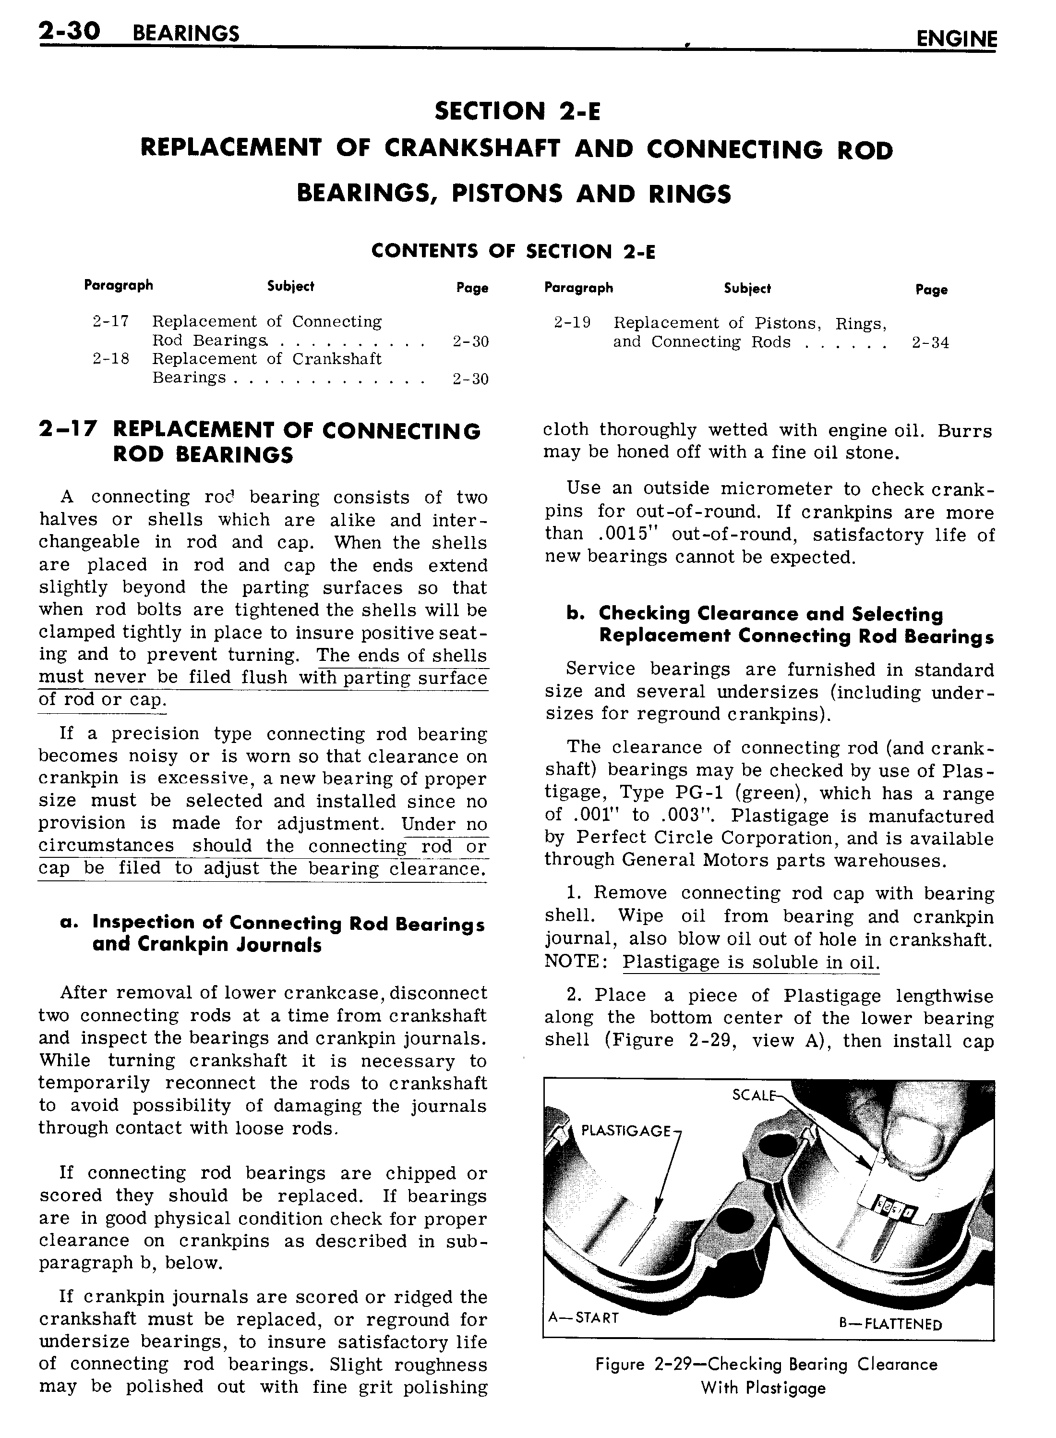 n_03 1961 Buick Shop Manual - Engine-030-030.jpg